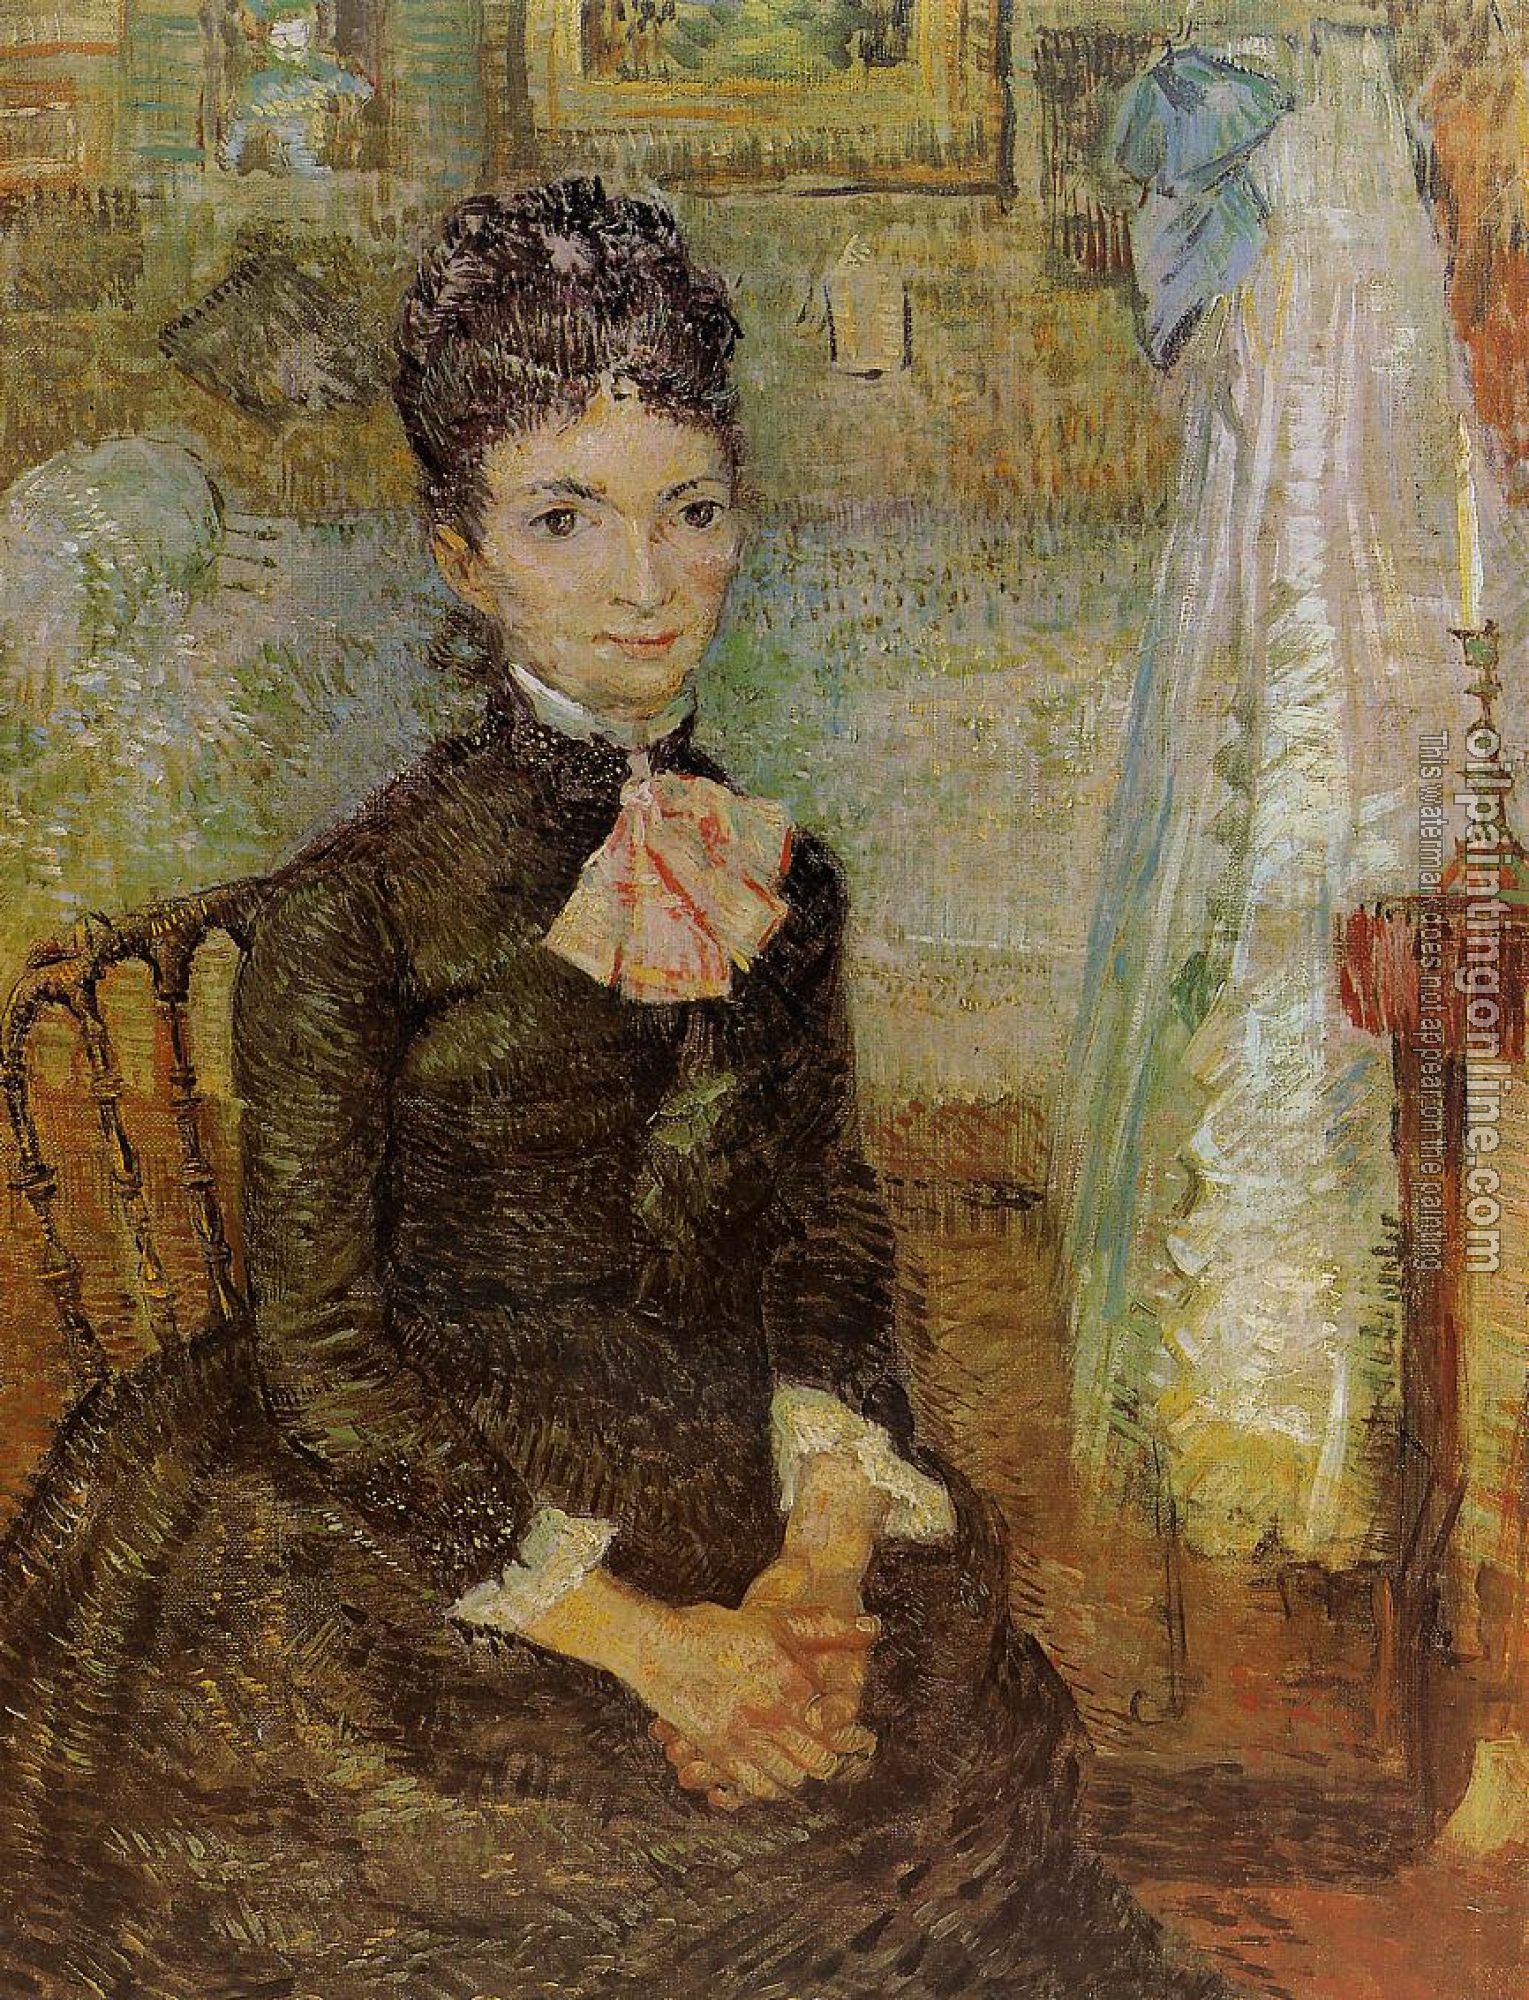 Gogh, Vincent van - Woman Sitting by a Cradle